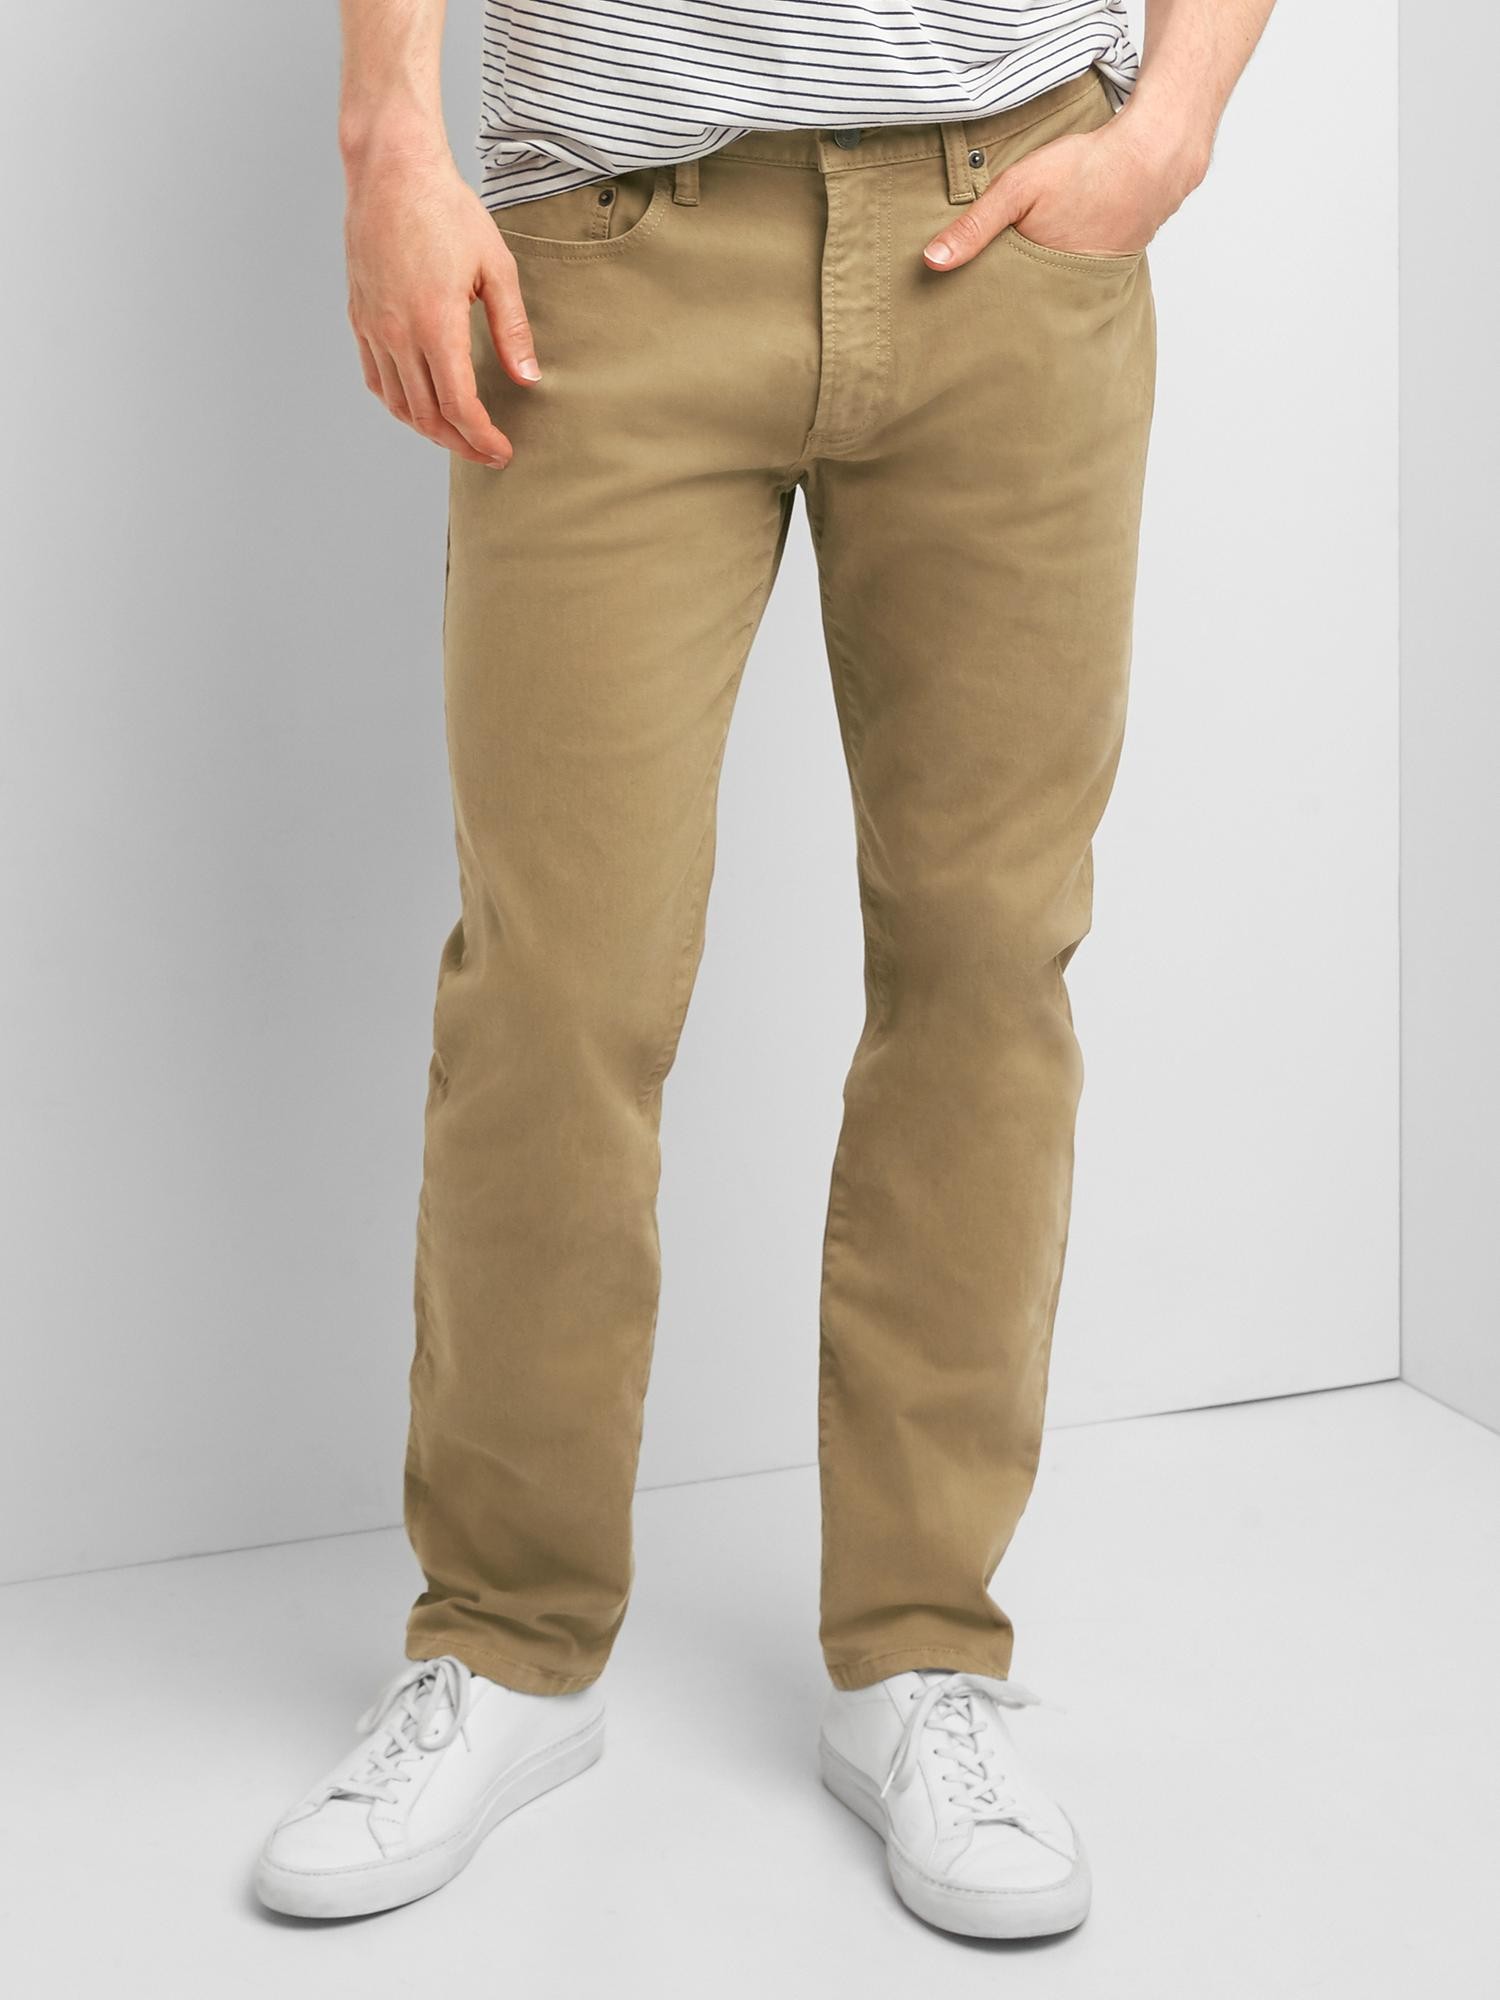 Gap Slim Fit jean pantolon. 1